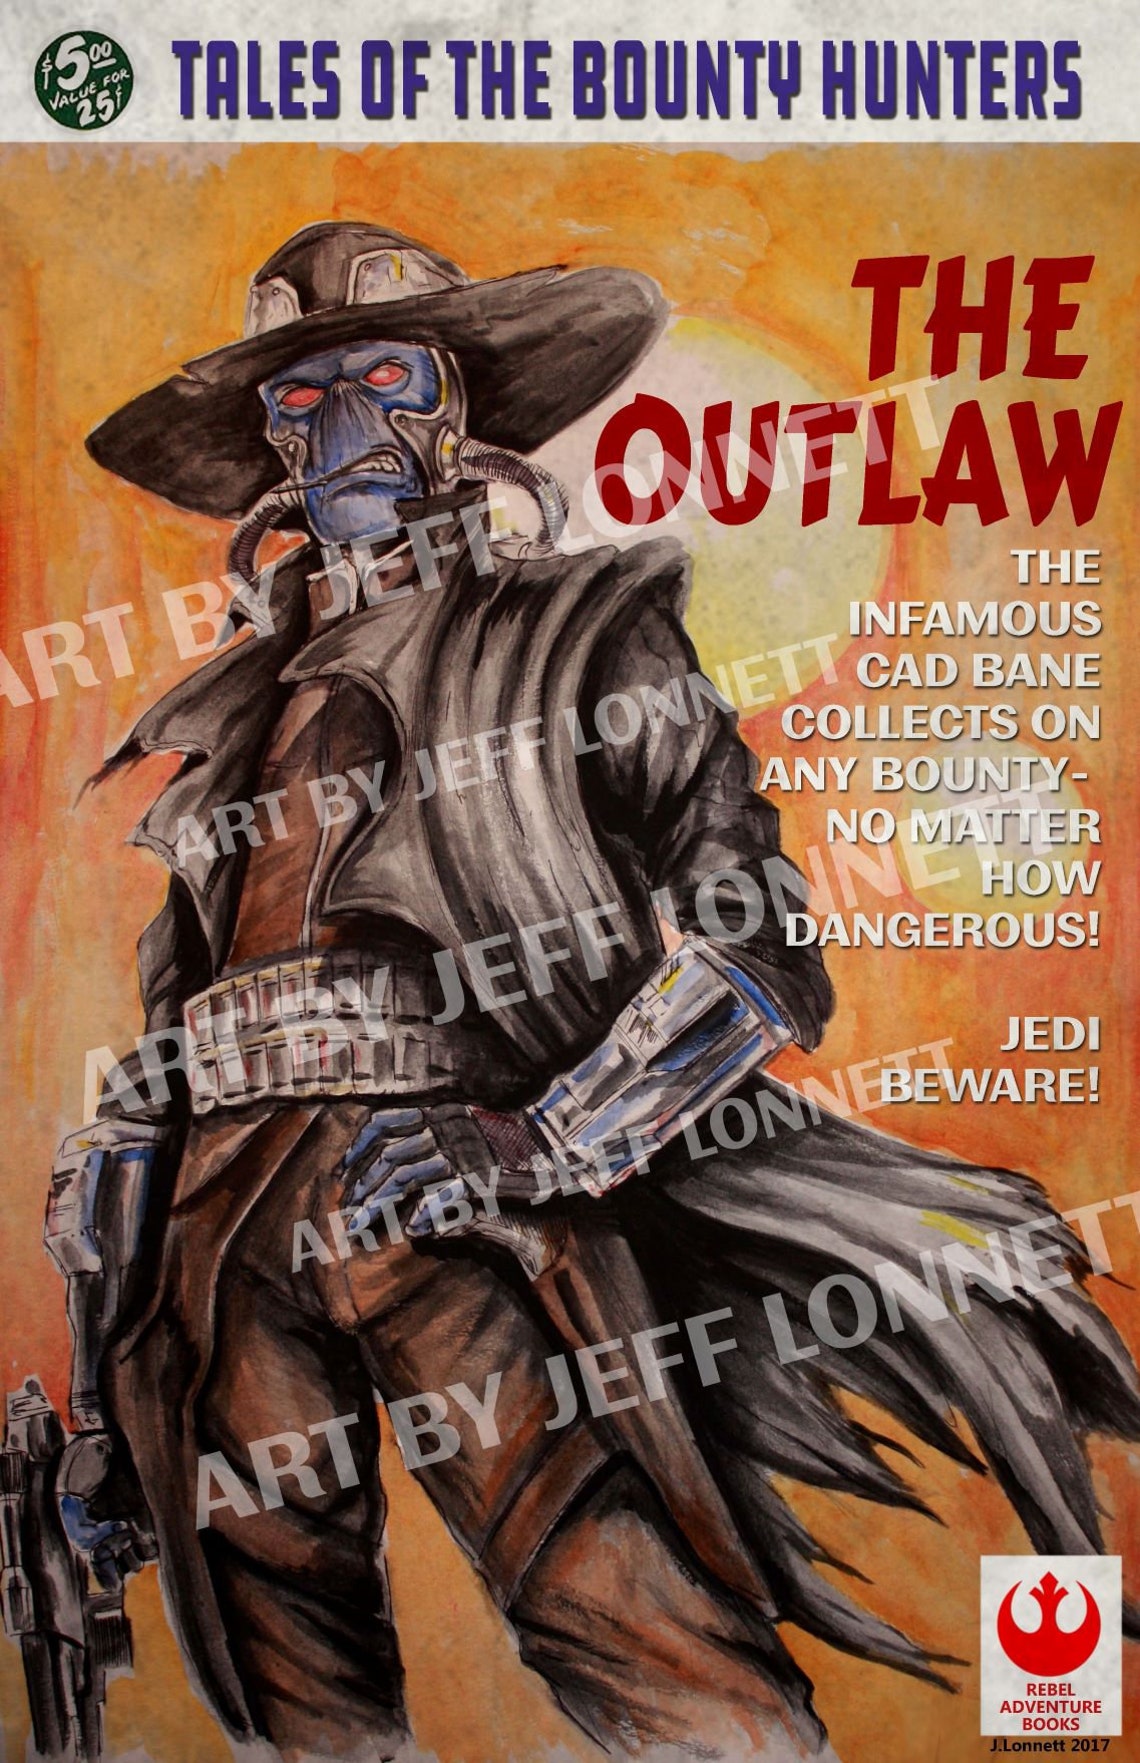 Star Wars Cad Bane retro pulp book cover satire 11x17 print | Etsy